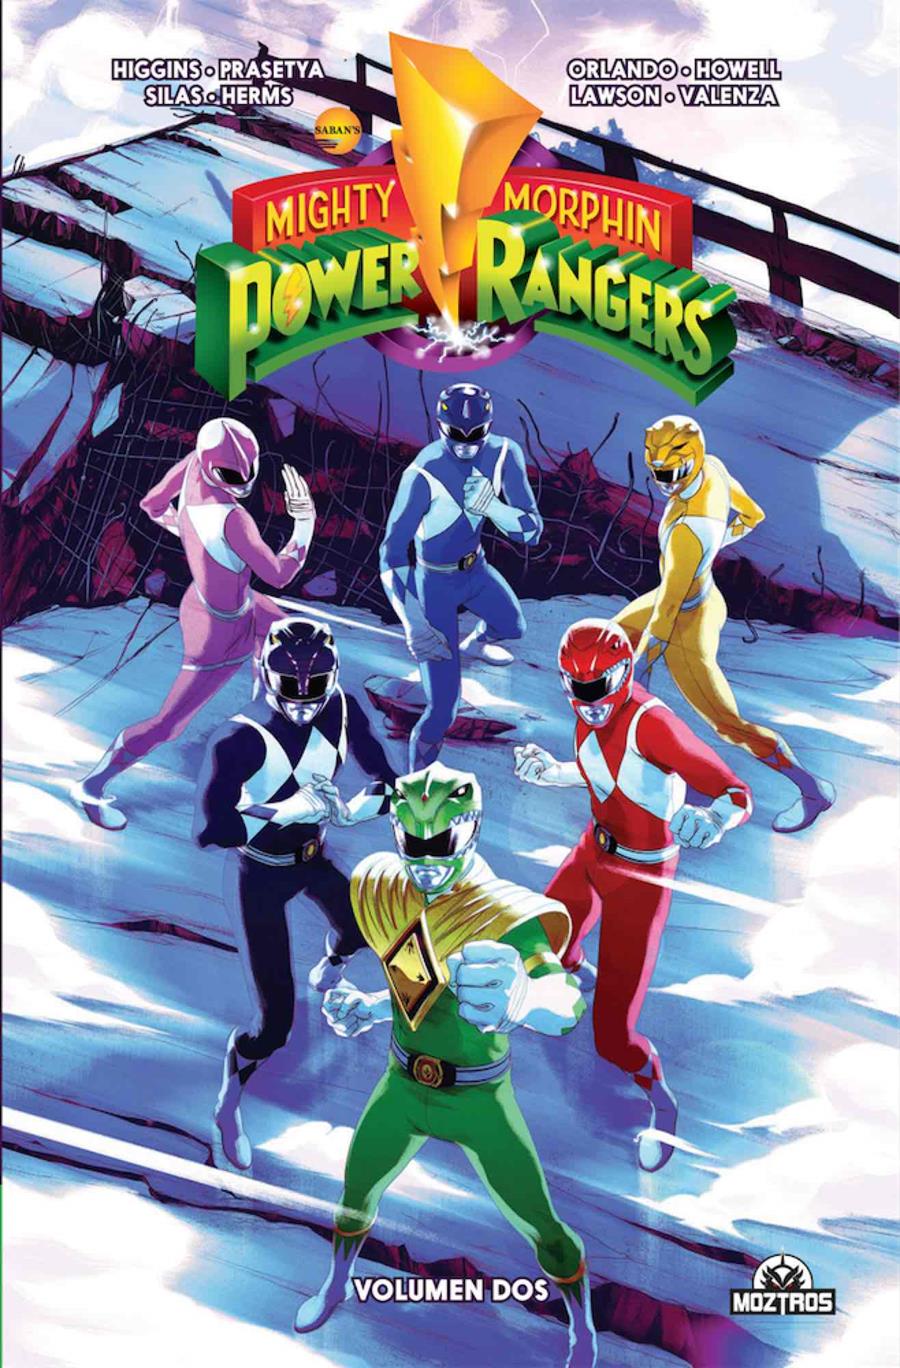 Power Rangers vol.2 | N0322-OTED03 | Kyle Higgins, Giuseppe Cafaro | Terra de Còmic - Tu tienda de cómics online especializada en cómics, manga y merchandising